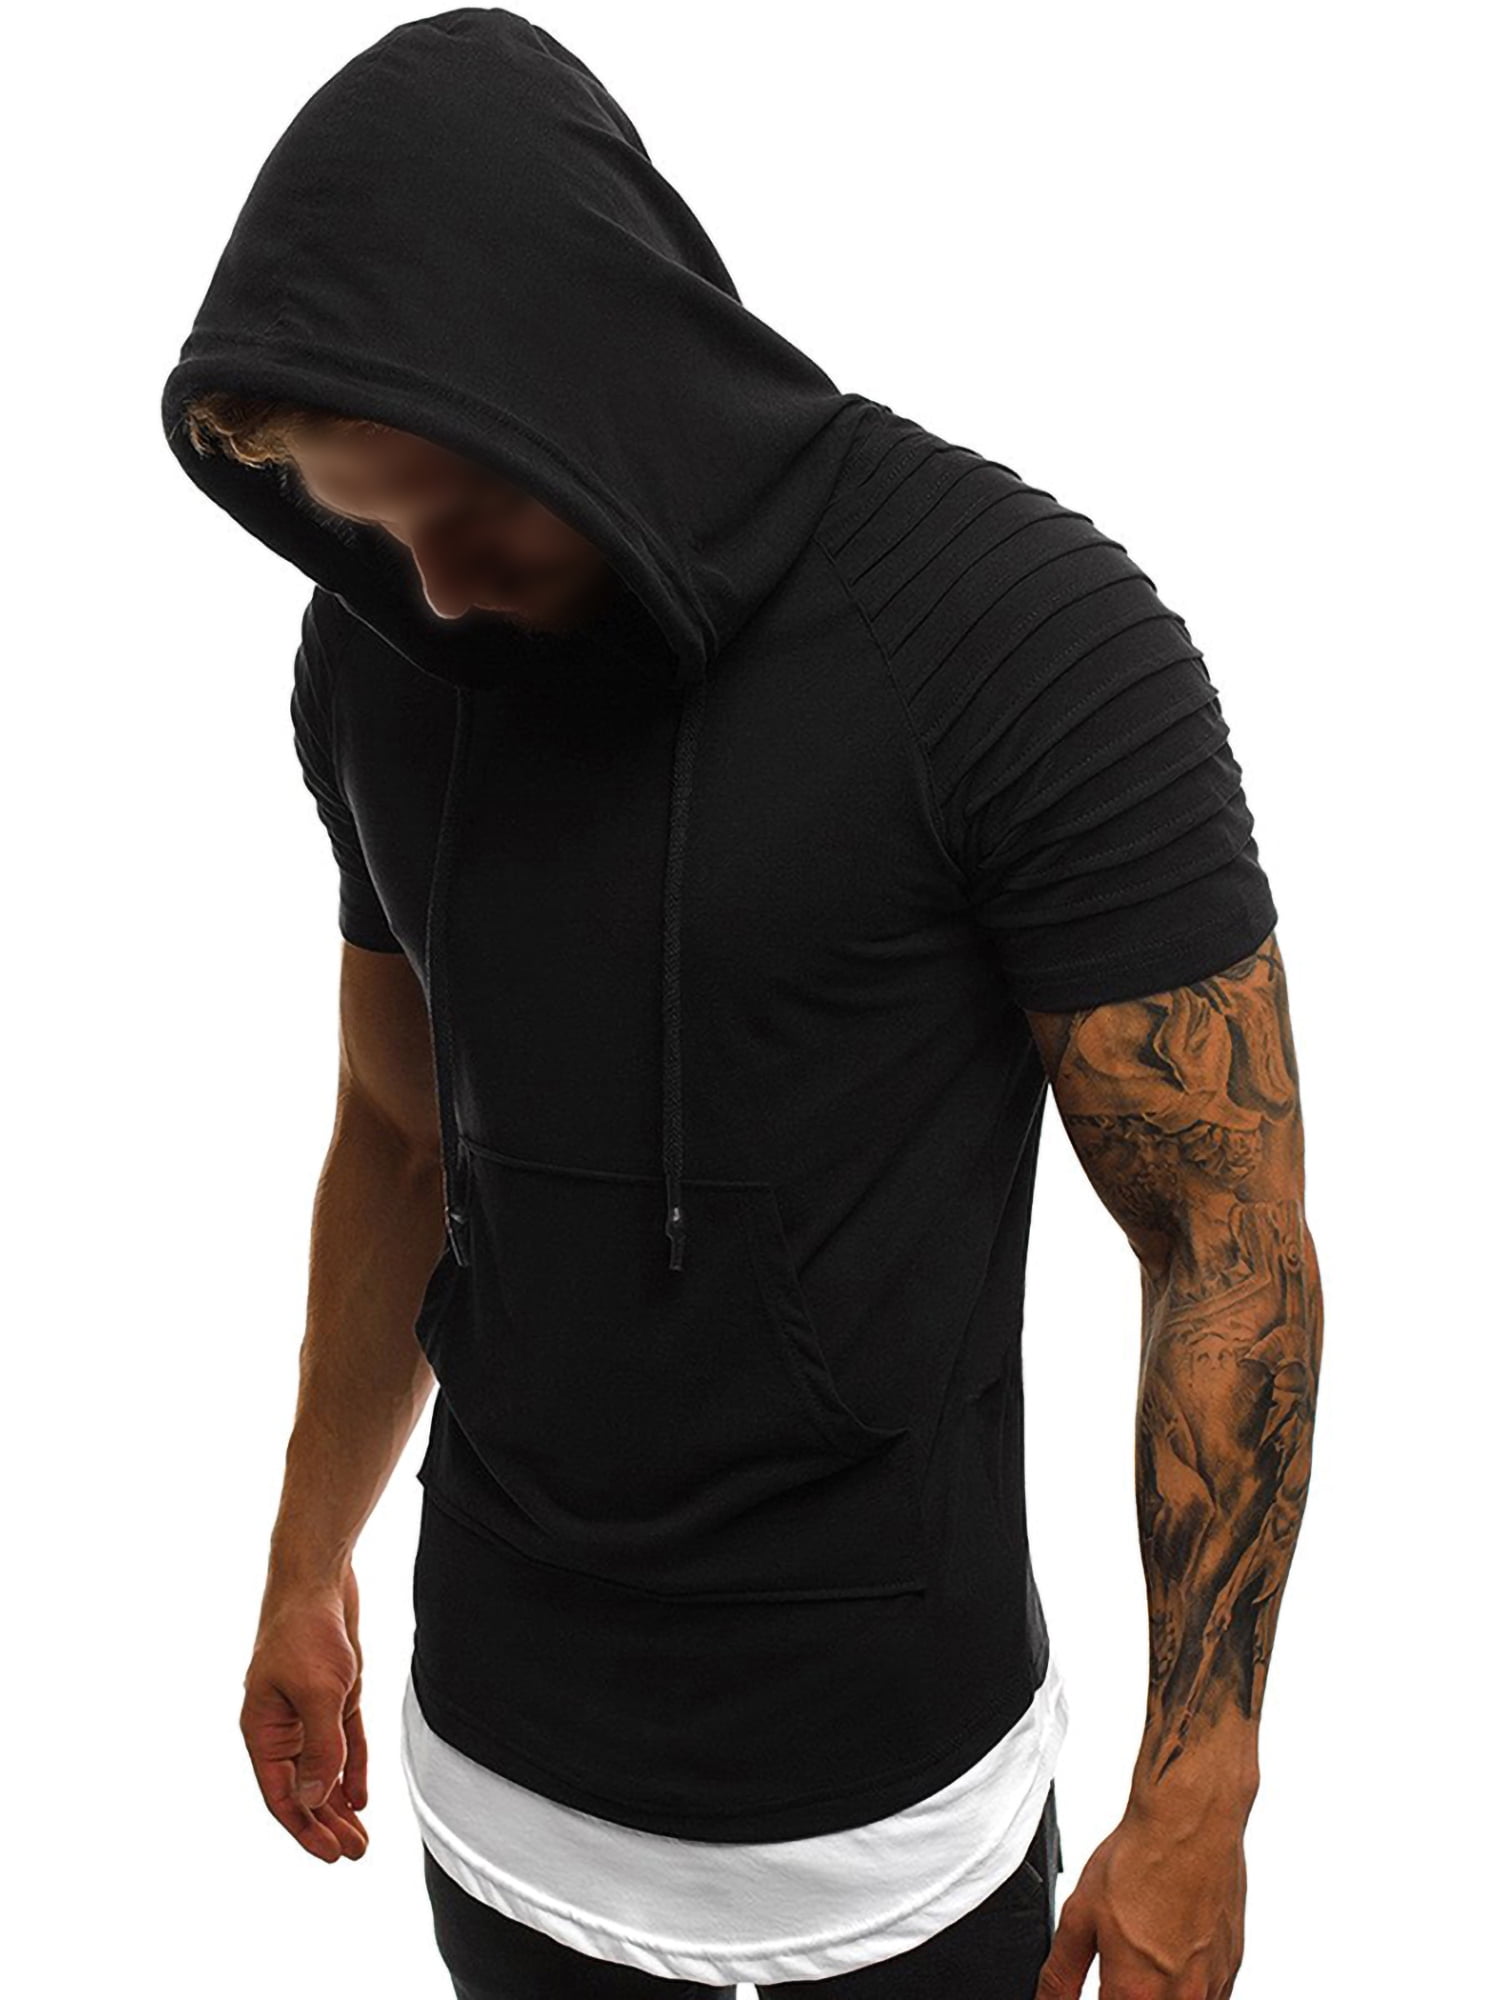 Save $10 Buy 3 HES HSA Logo Short and Long Sleeve Shirt and Hooded Sweatshirt 